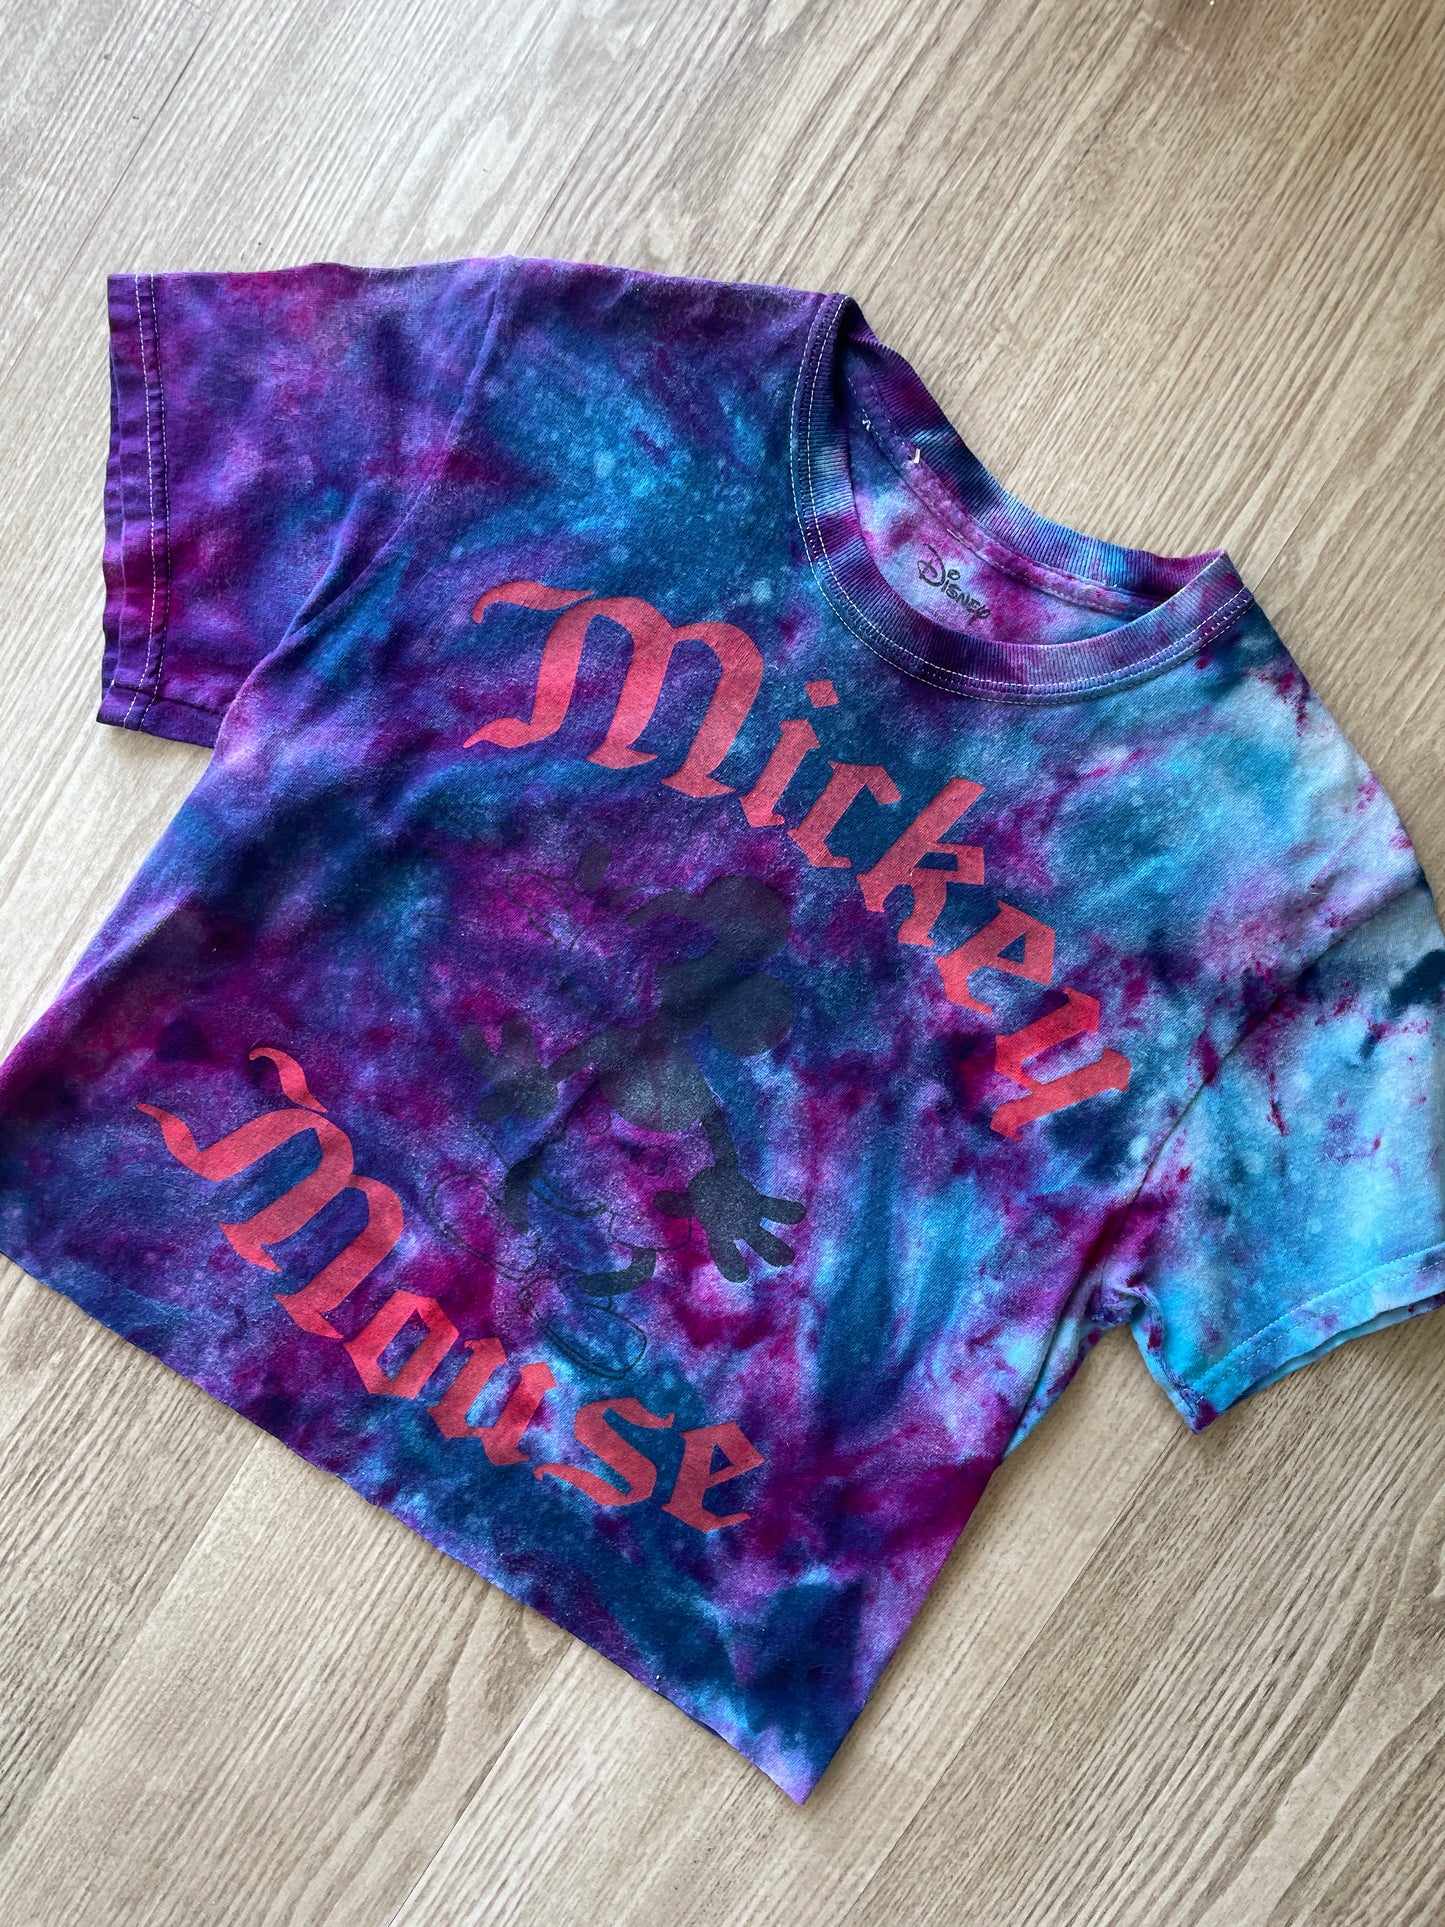 Small Men’s Mickey Mouse Handmade Galaxy Tie Dye Cropped T-Shirt | Blue and Purple Ice Dye Tie Dye Short Sleeve Crop Top